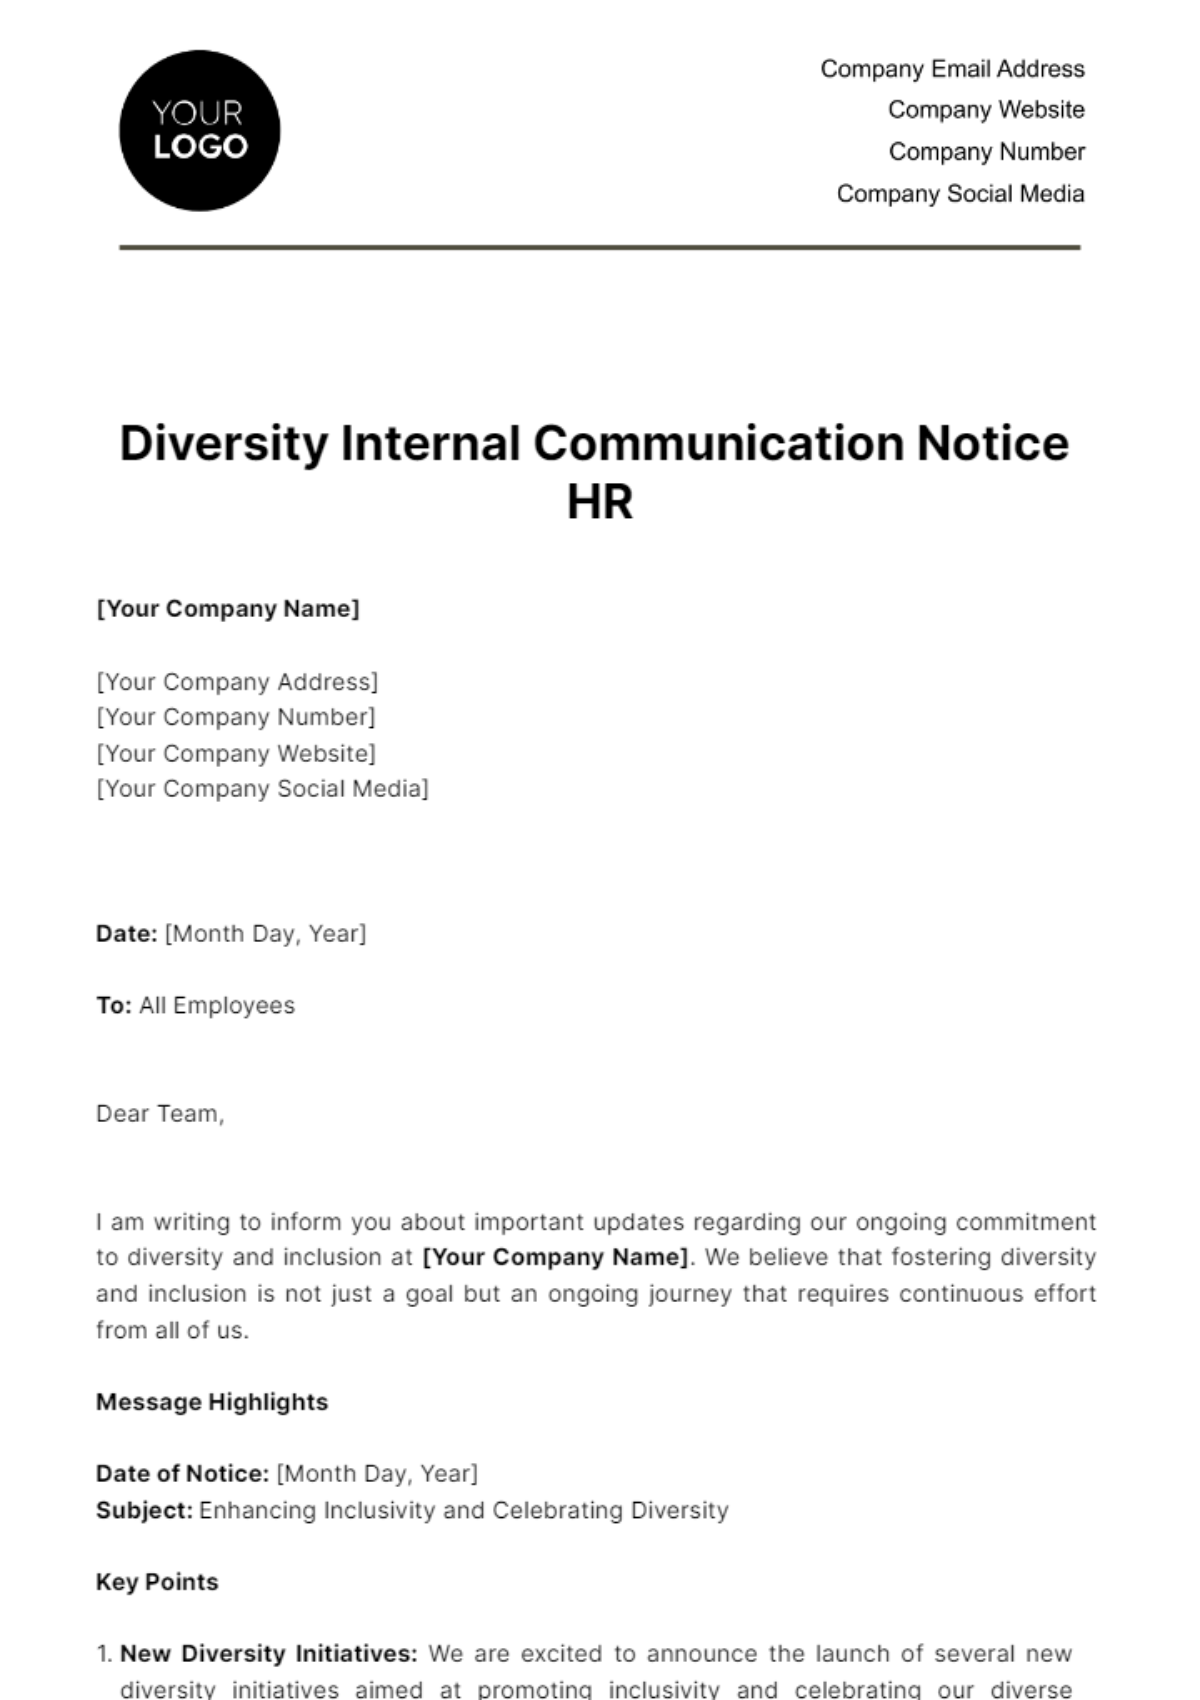 Diversity Internal Communication Notice HR Template